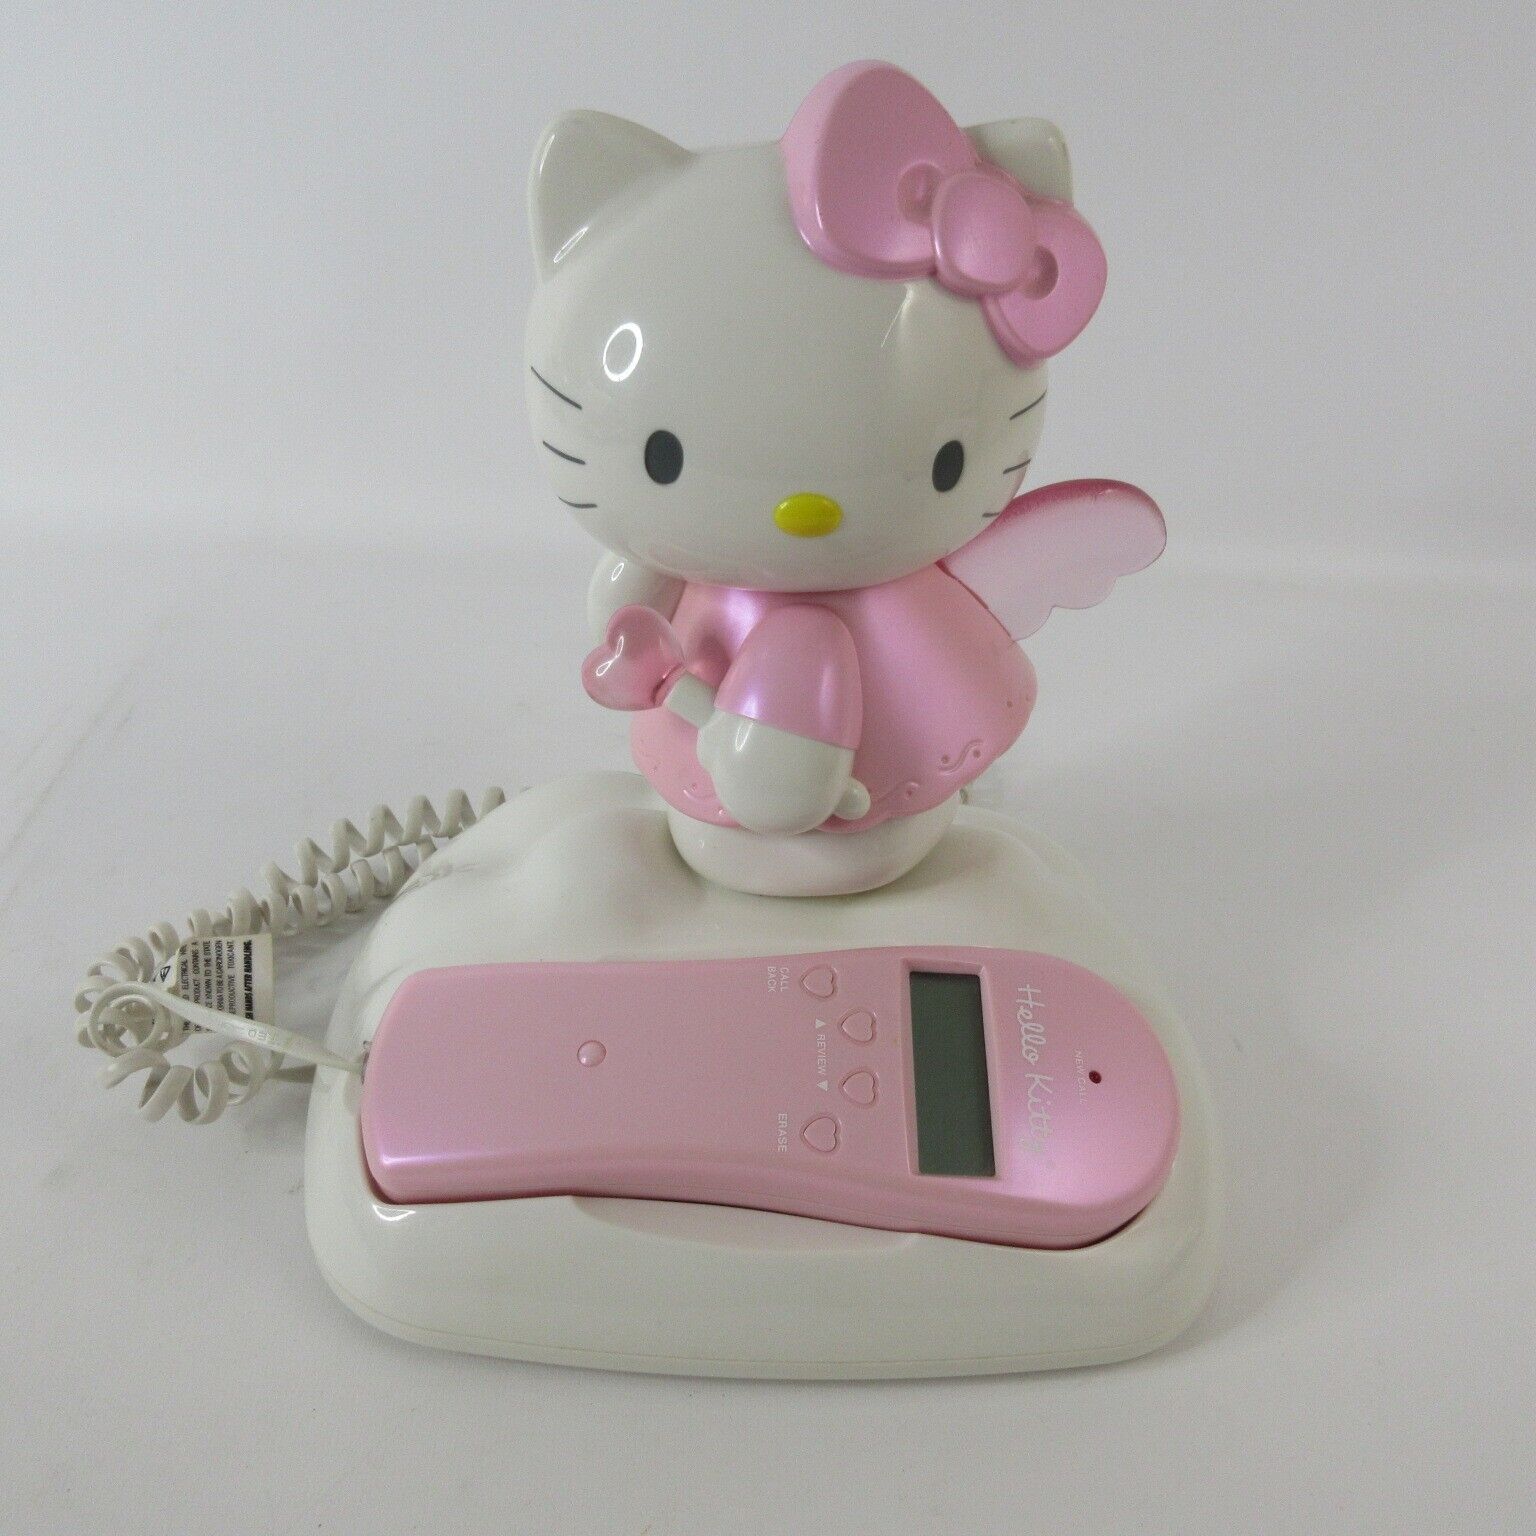 SANRIO Hello Kitty Bling Phone Landline Telephone Pink Fairy KT2010 Works Cords